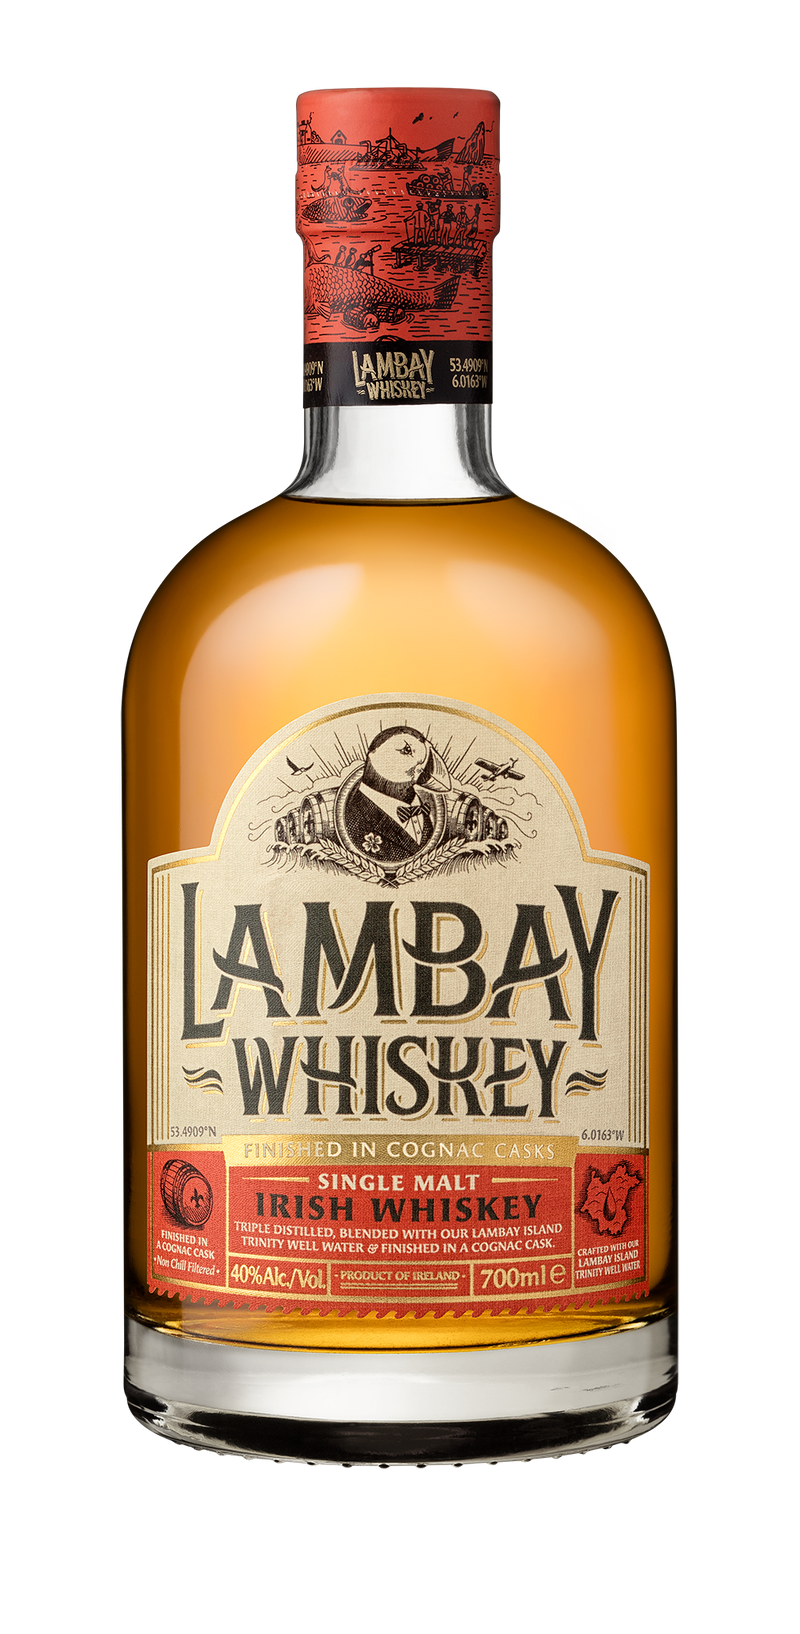 Lambay Single Malt Irish Whiskey 750ml